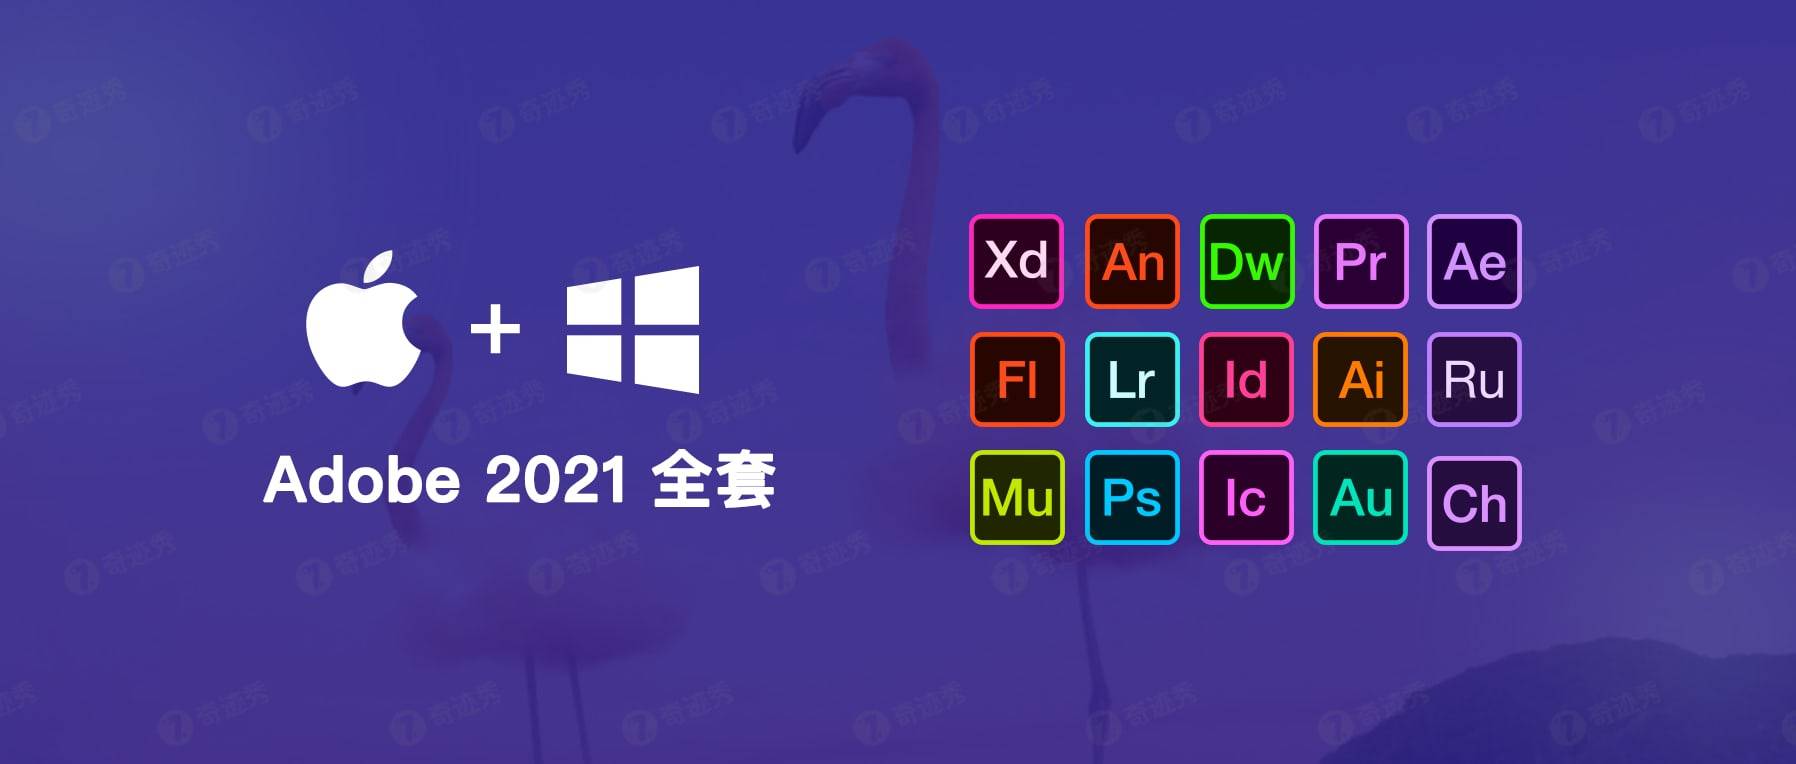 Adobe CC 2021 全套下载